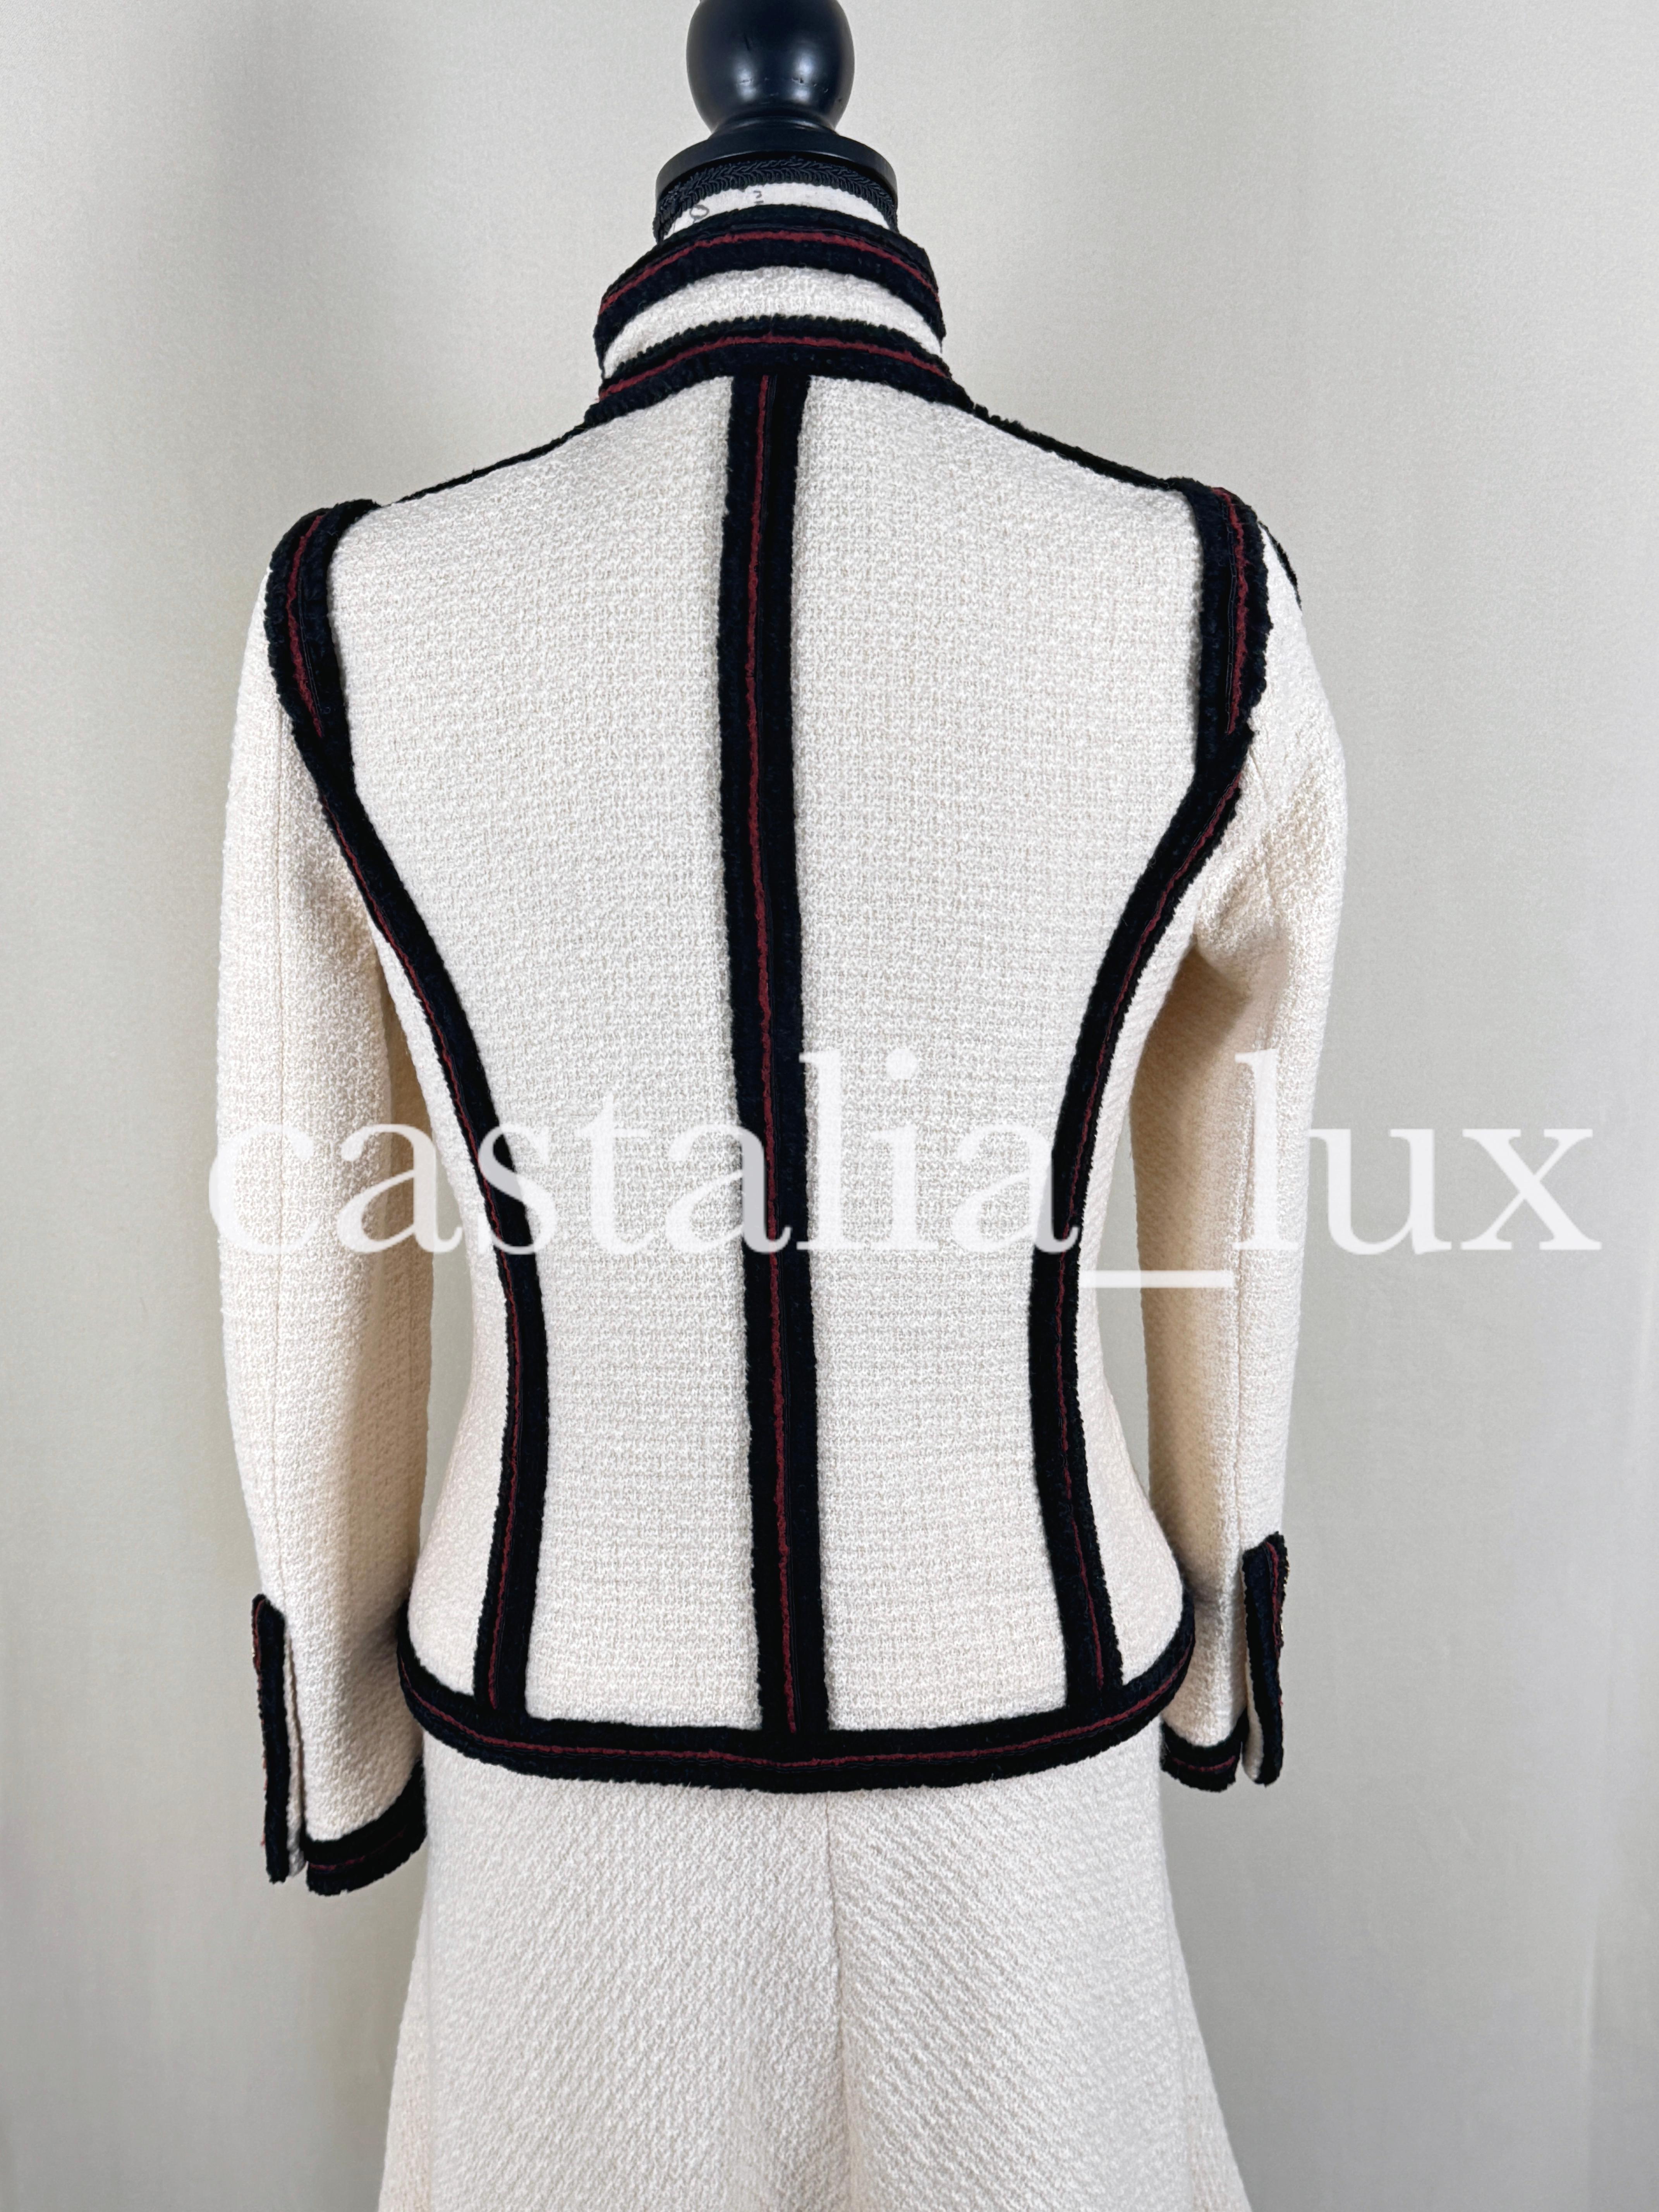 Chanel Kate Moss Stil Sammler Tweed Jacke im Angebot 14